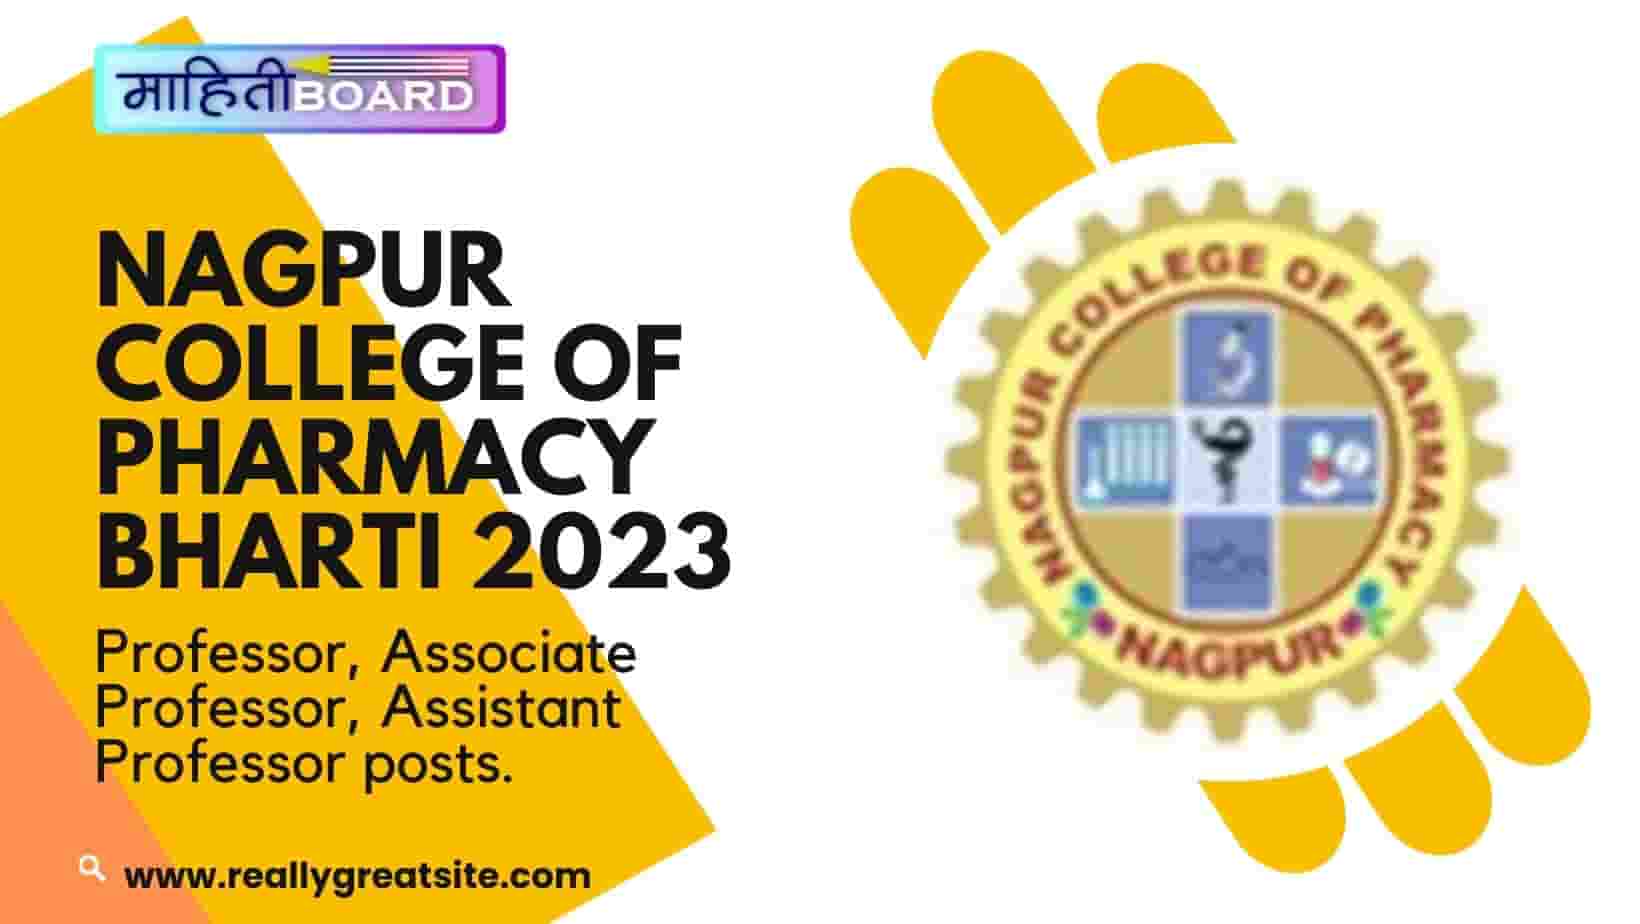 Nagpur College Of Pharmacy Bharti 2023